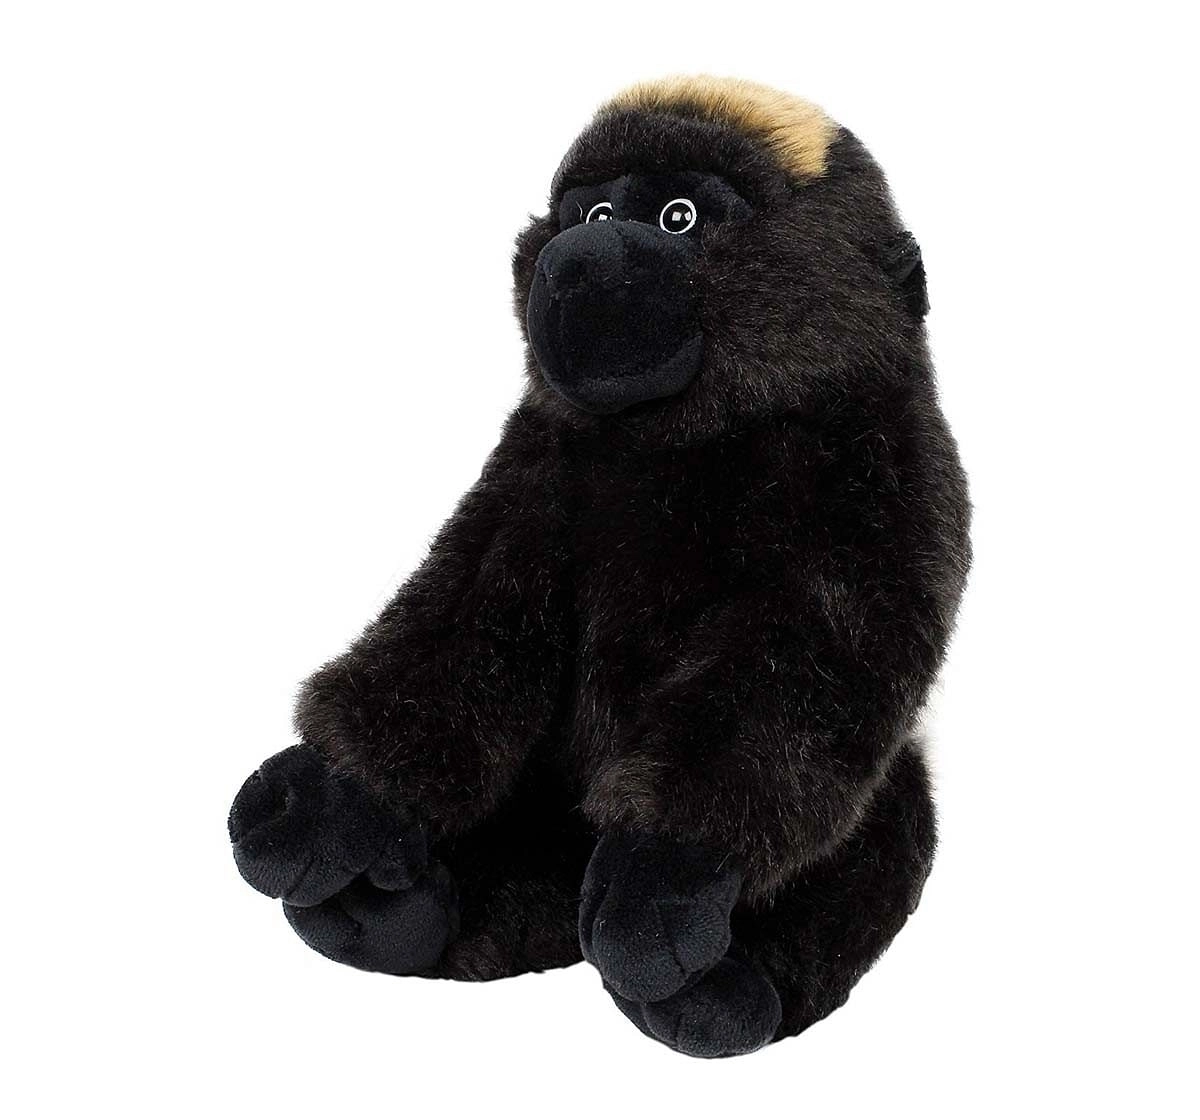 Hamleys Black Baby Gorilla Animal Plush Soft Toy for Kids age 12M+ 20 Cm 